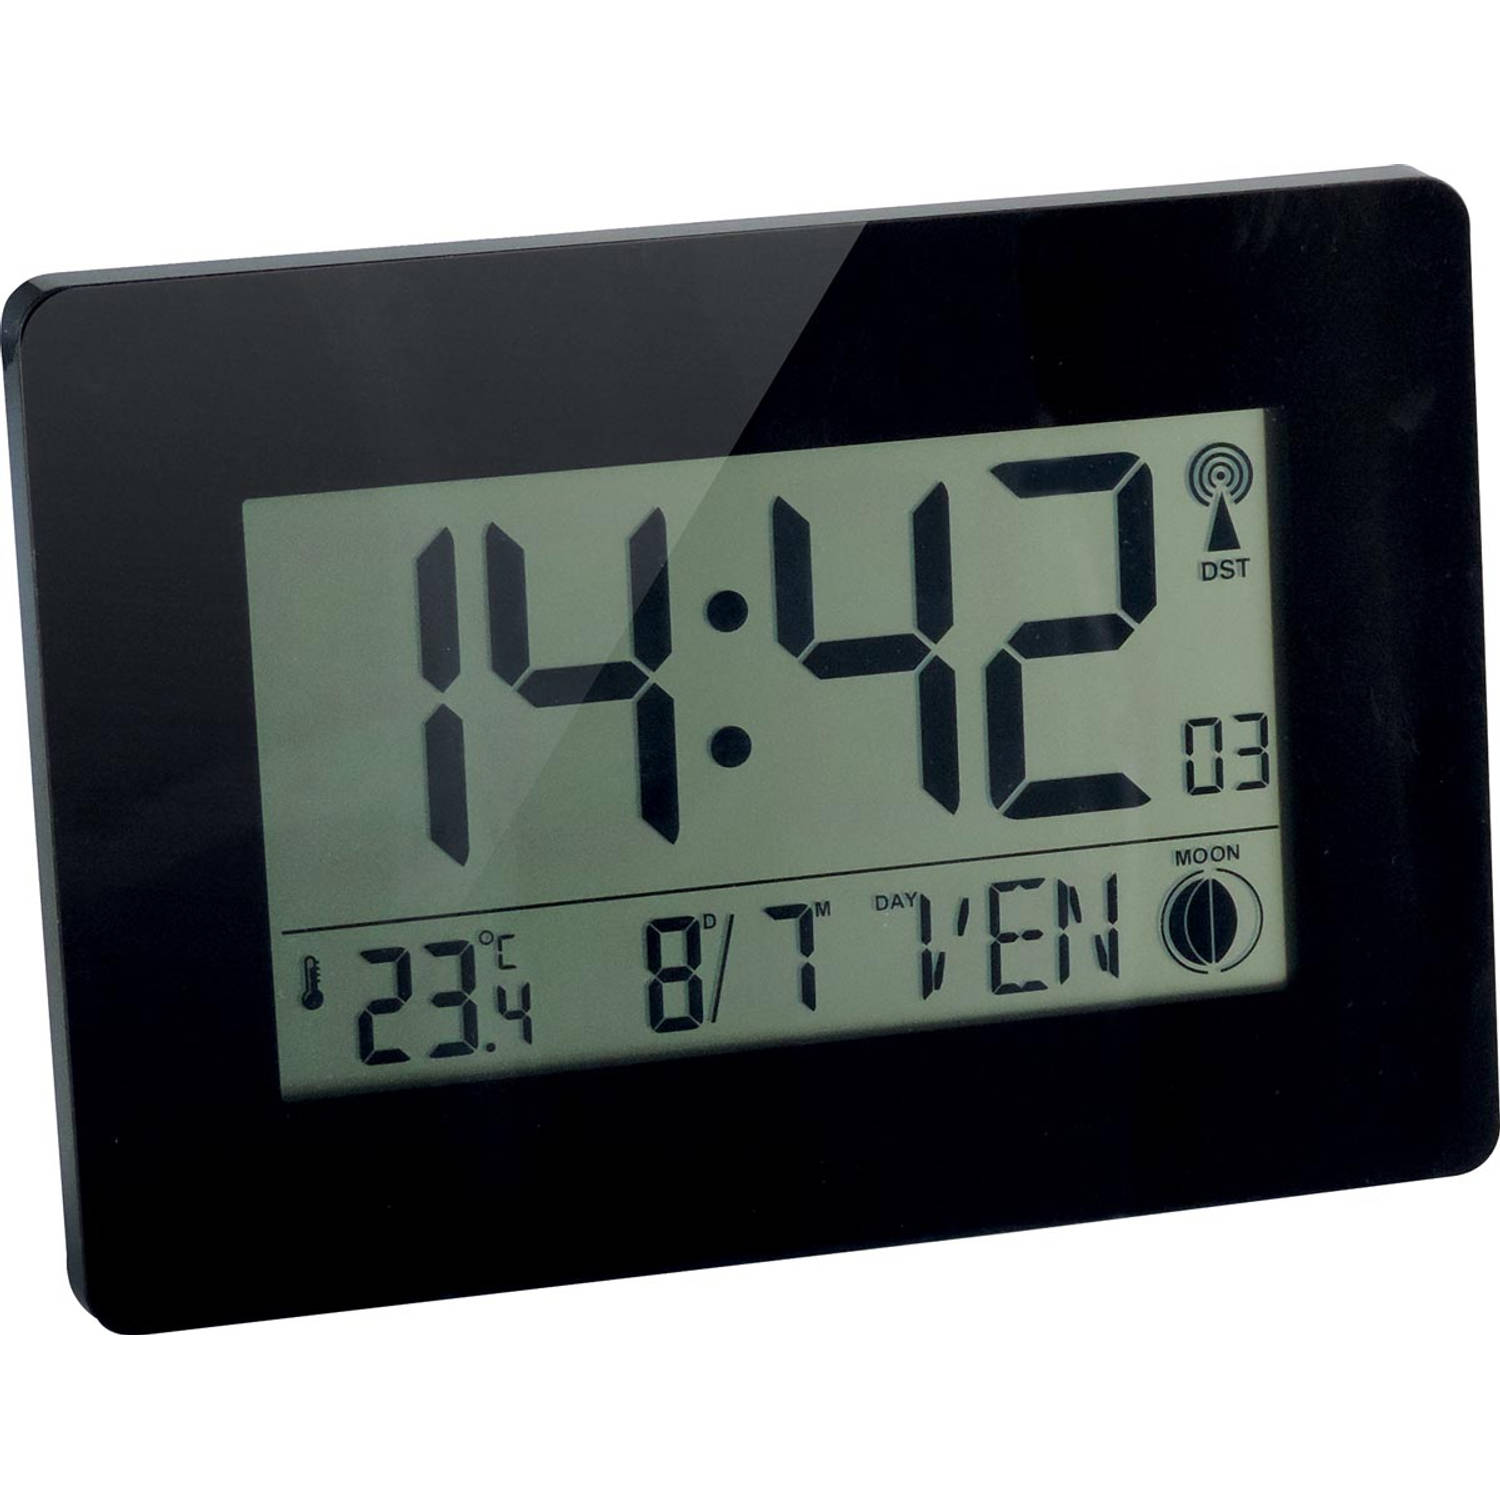 Orium by CEP digitale radiogestuurde klok met LCD scherm, multifunctioneel, ft 22,9 x 2,7 x 16,2 cm 10 stuks